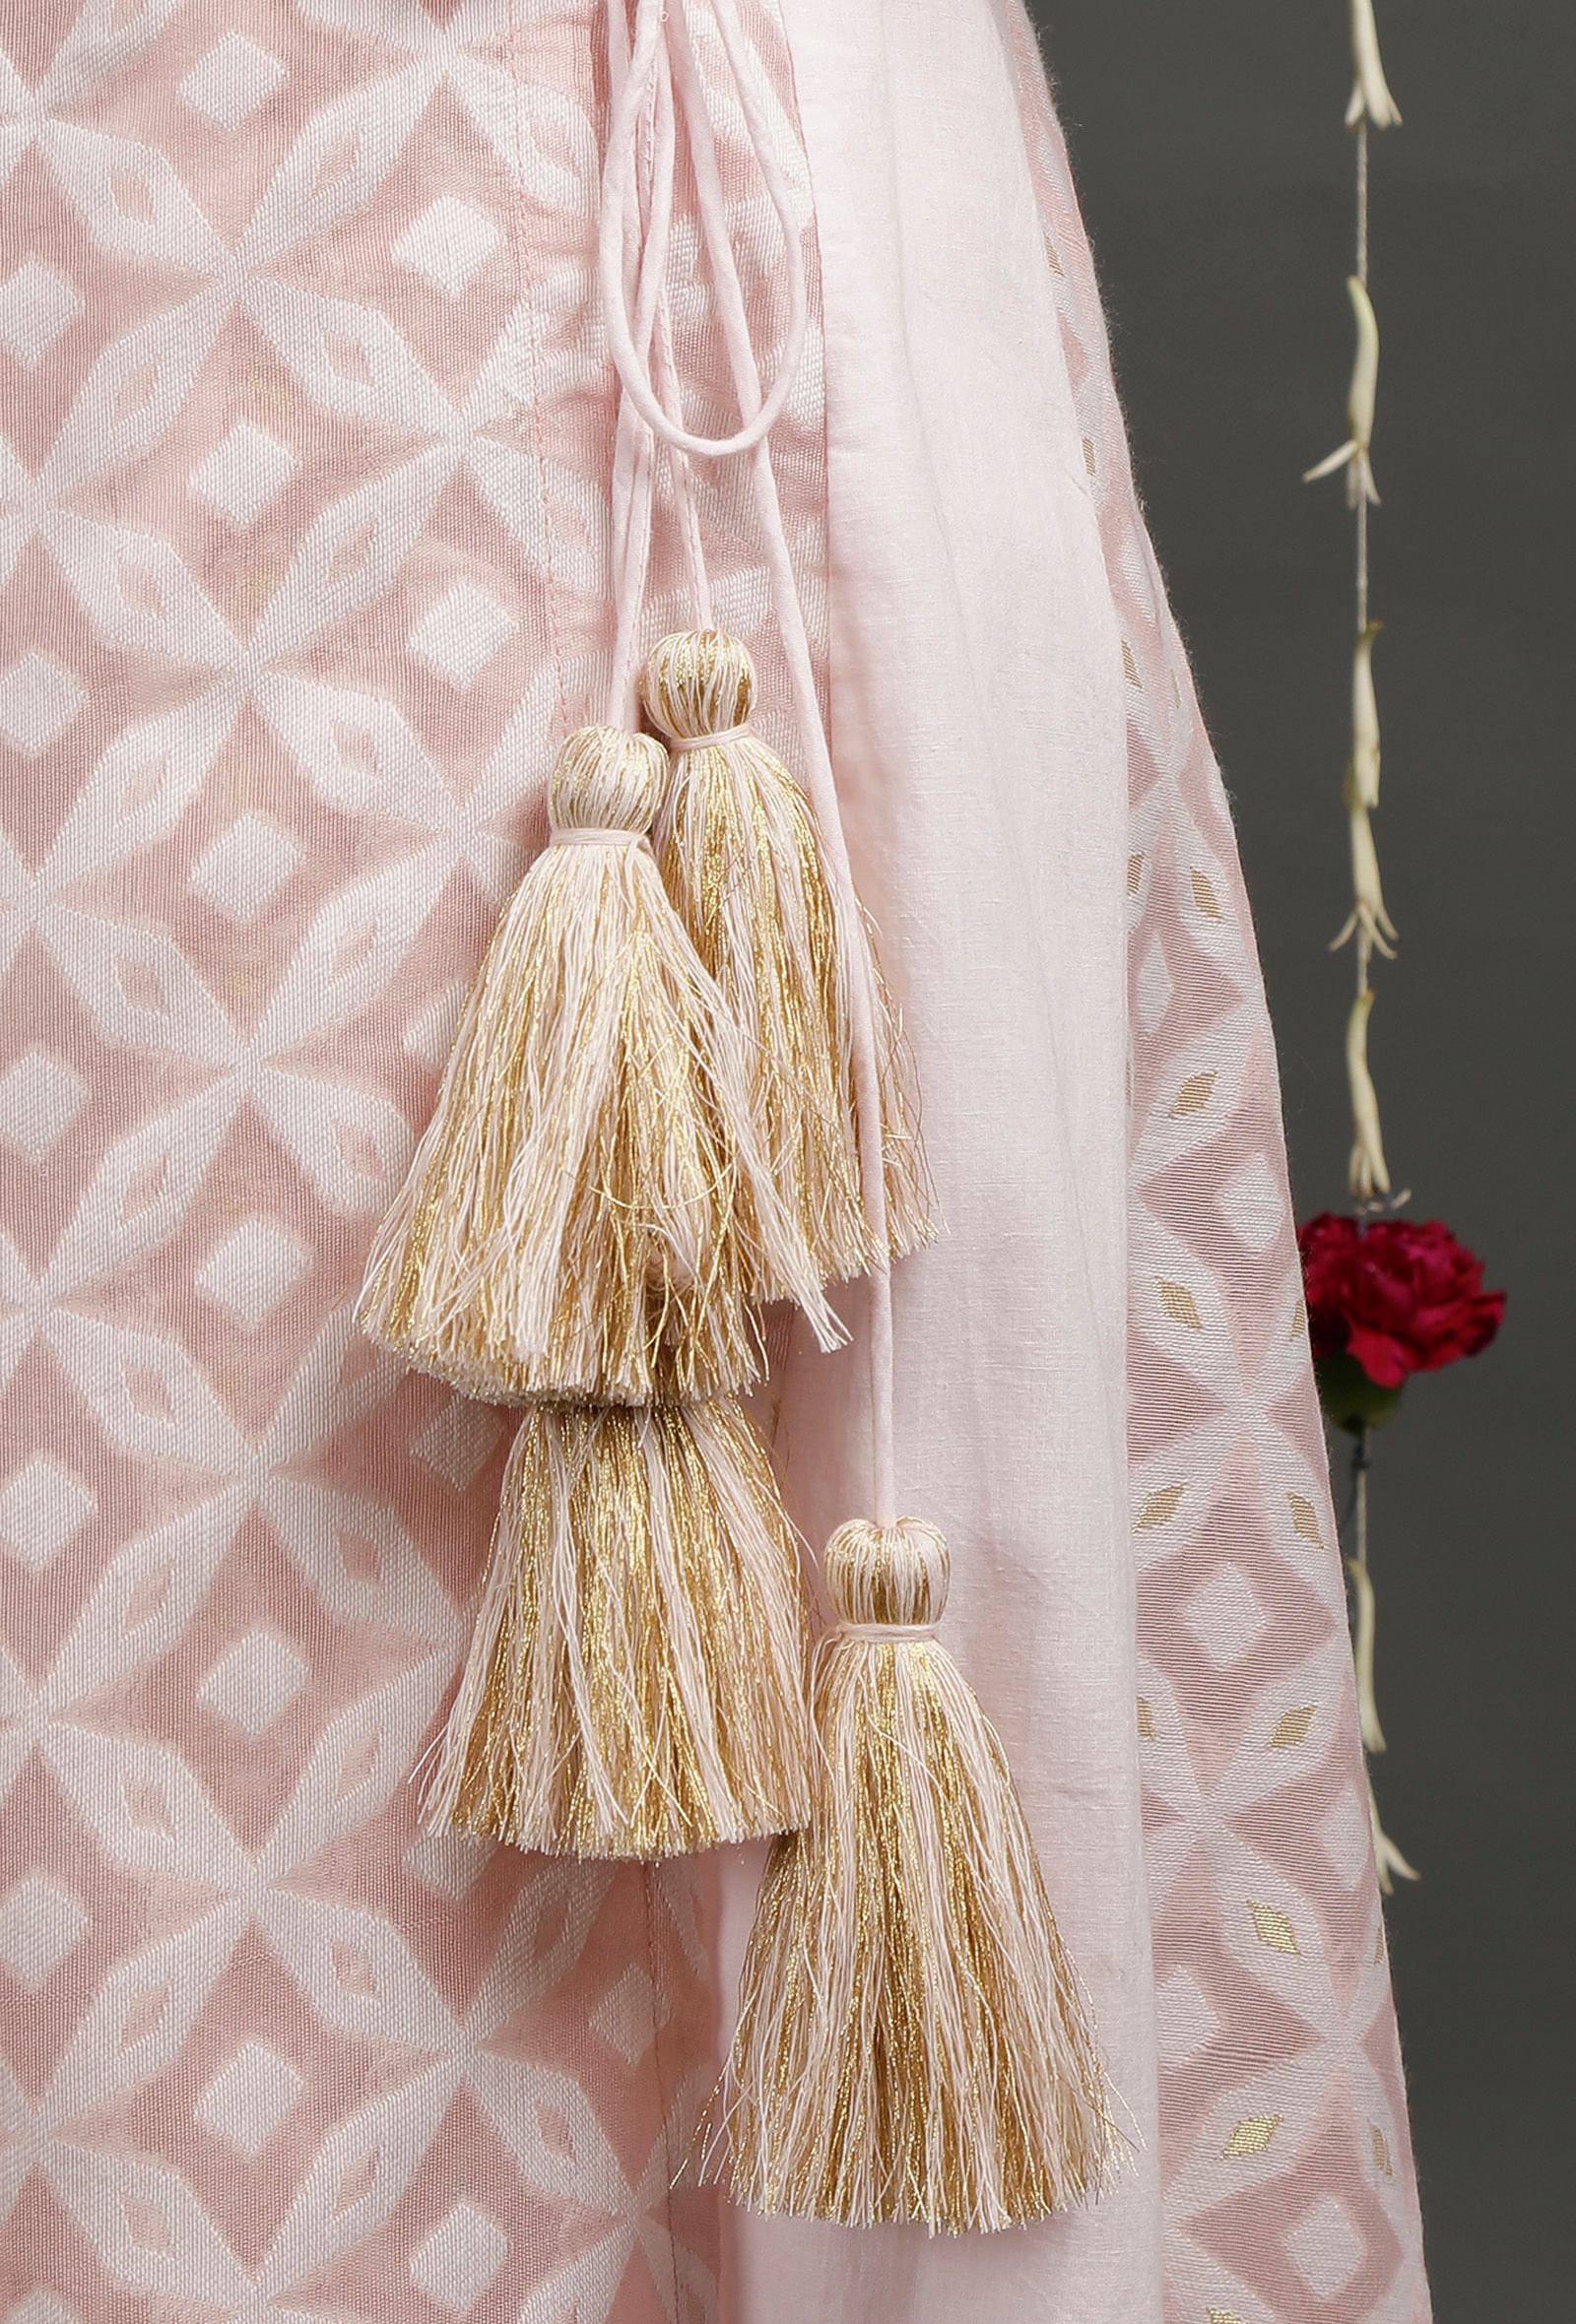 Set Of 2: Pearl Pink Floral Jamdani Angrakha Kurta Dress With Pink Churidar Pants